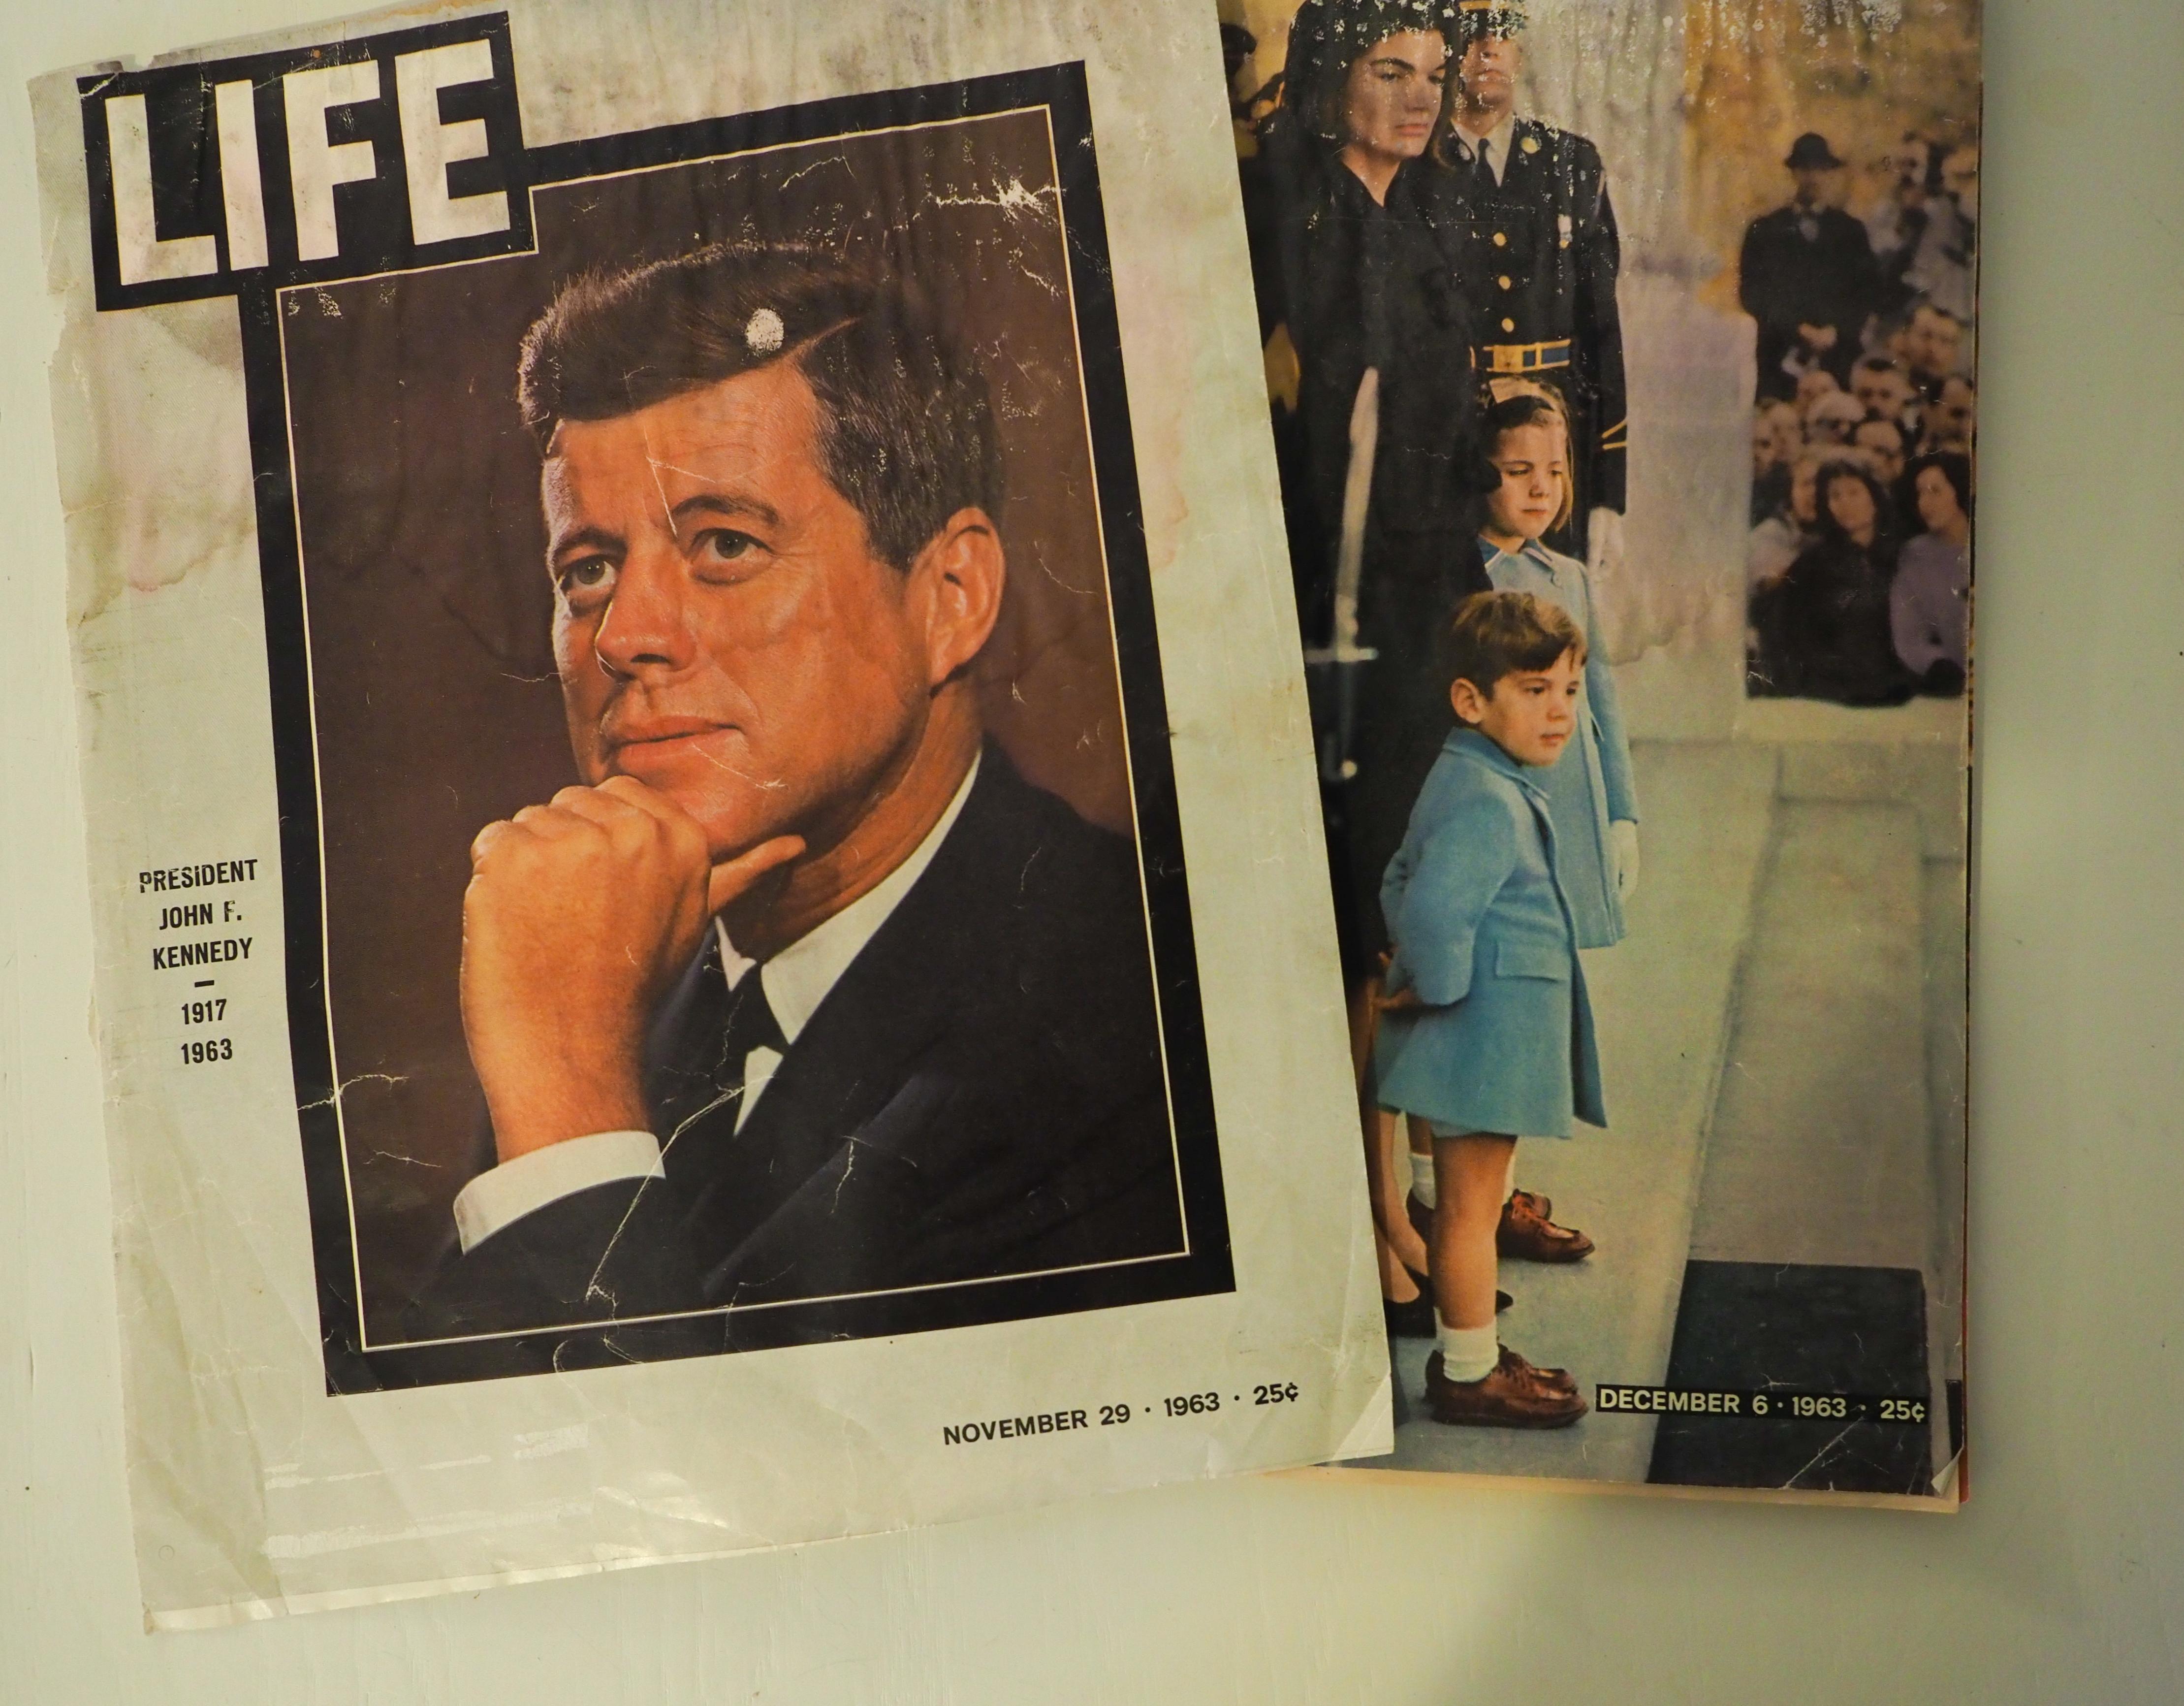 Dallas, Texas/USA - November 29, December 6, 1963 Life Magazine covers showiing John F. Kennedy, Jacqueline Kennedy, Caroline Kennedy and John Kennedy Jr. after JFK's assassination.